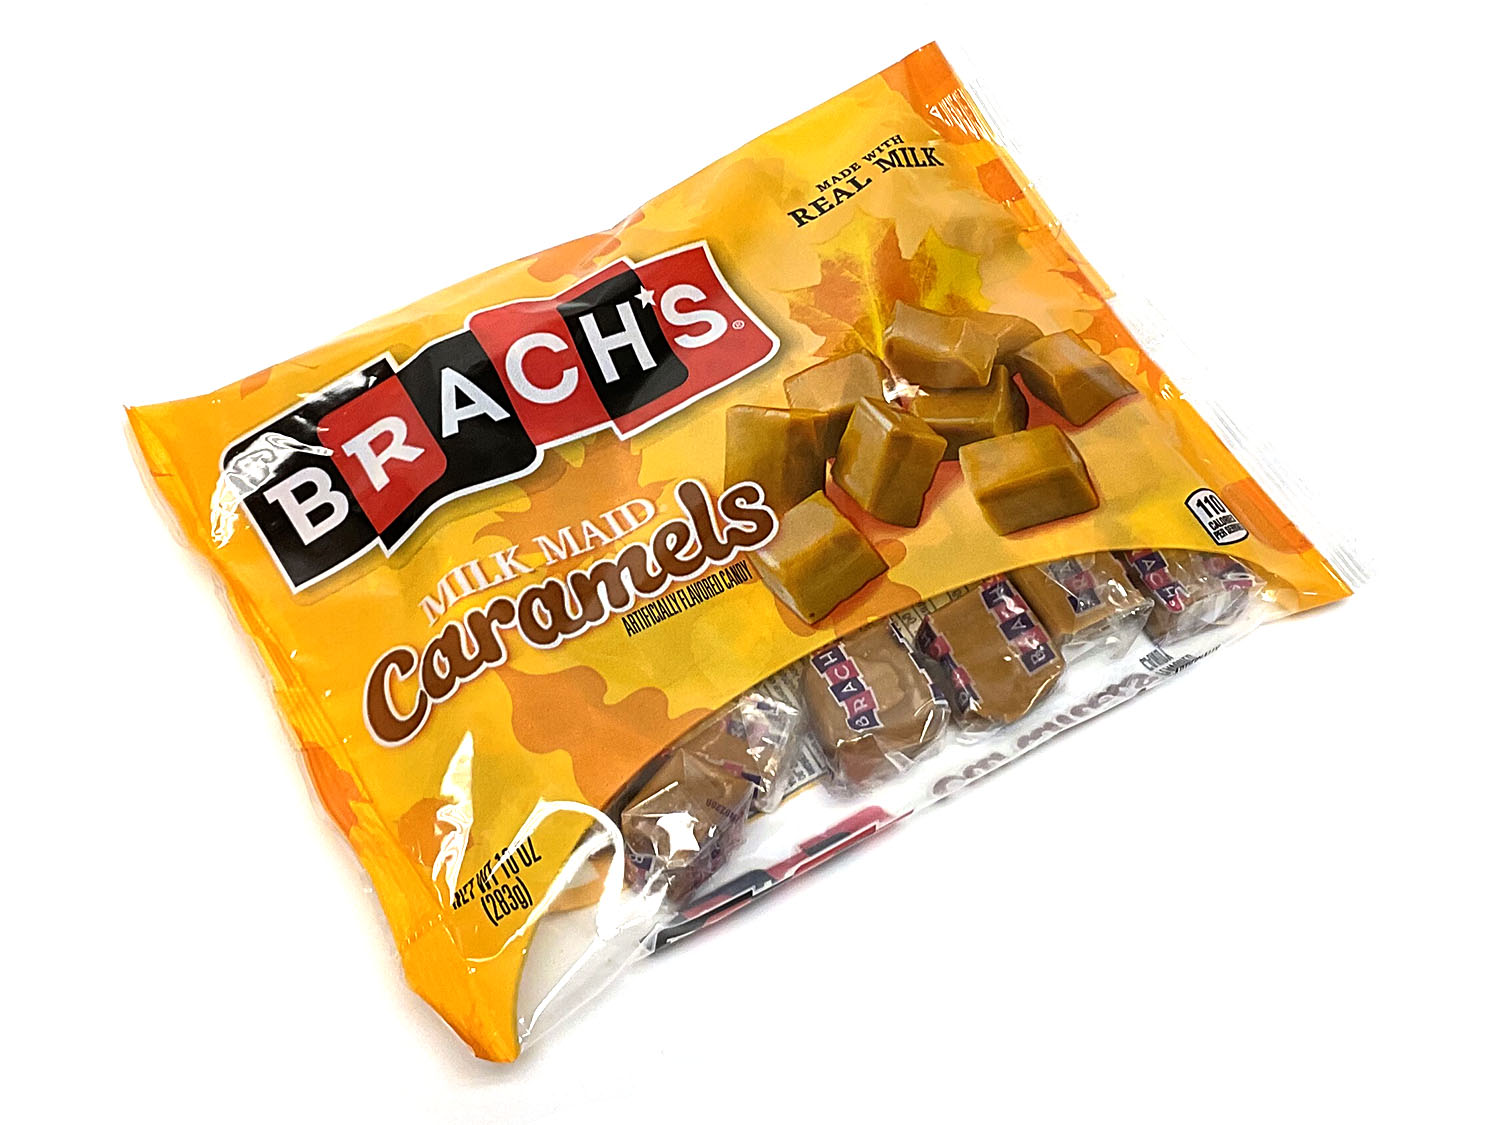 Brachs Natural Candy Corn, BRACH'S SEASONAL